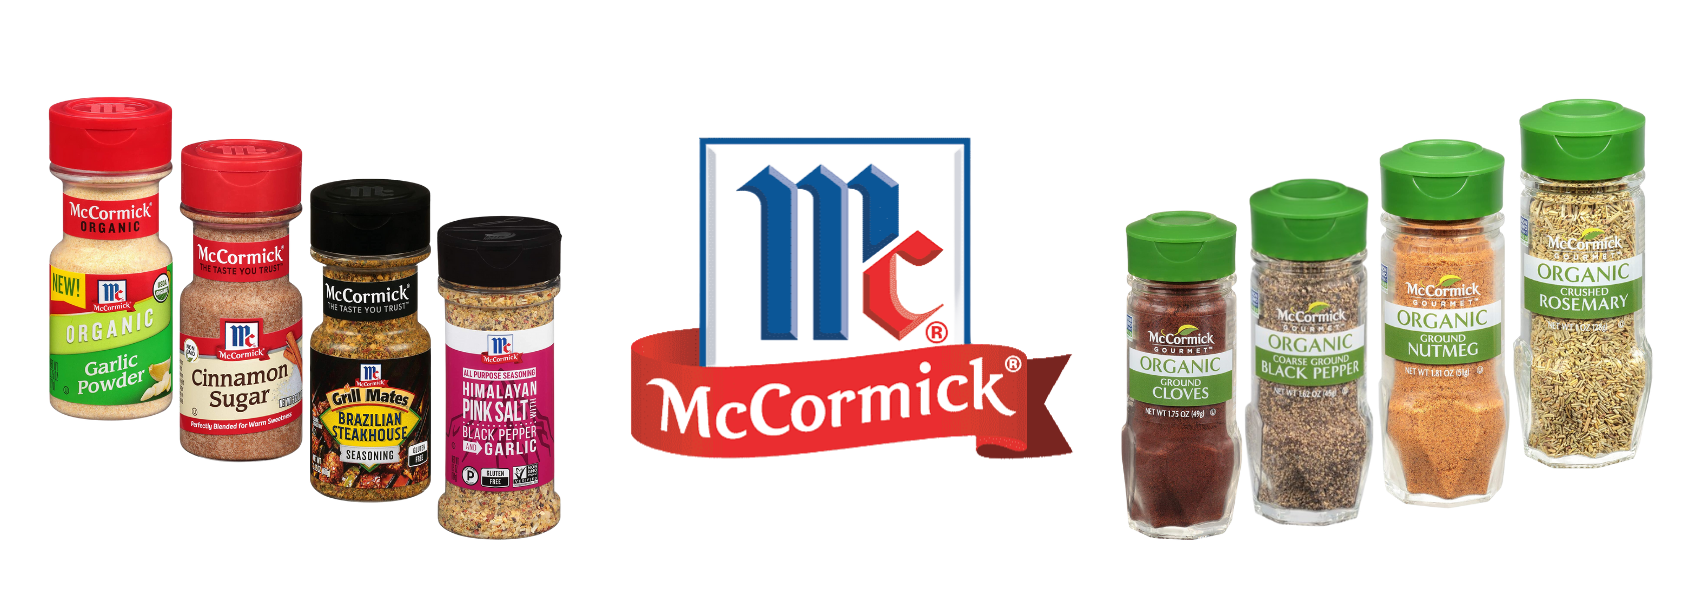 McCormick Perfect Pinch Salad Supreme Seasoning, 8.25 oz - Deals